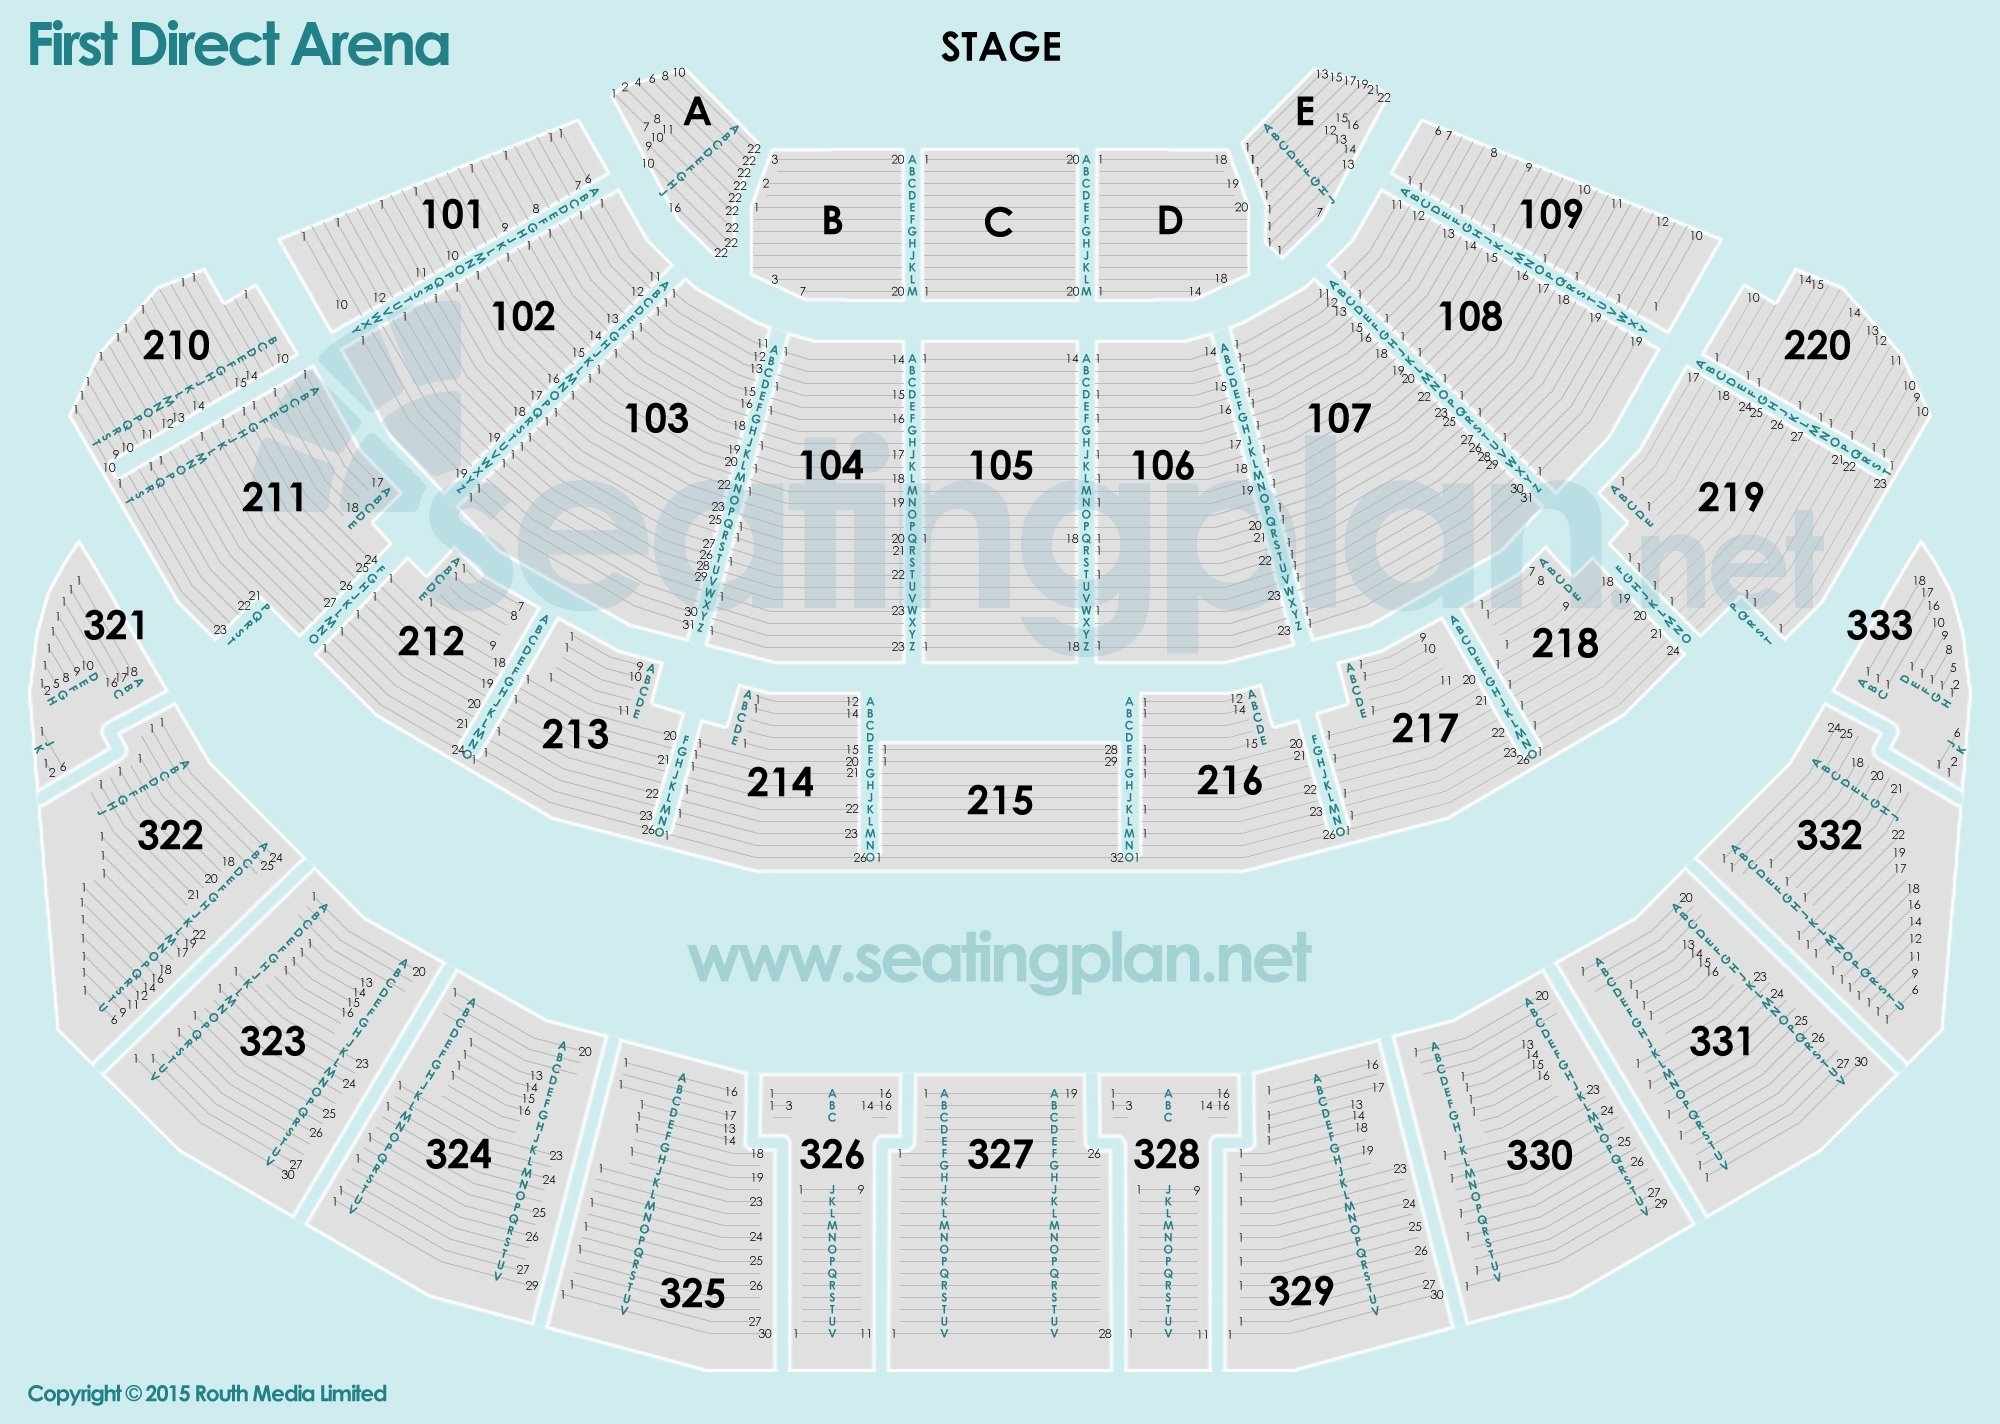 detailed Seating Plan at First Direct Arena